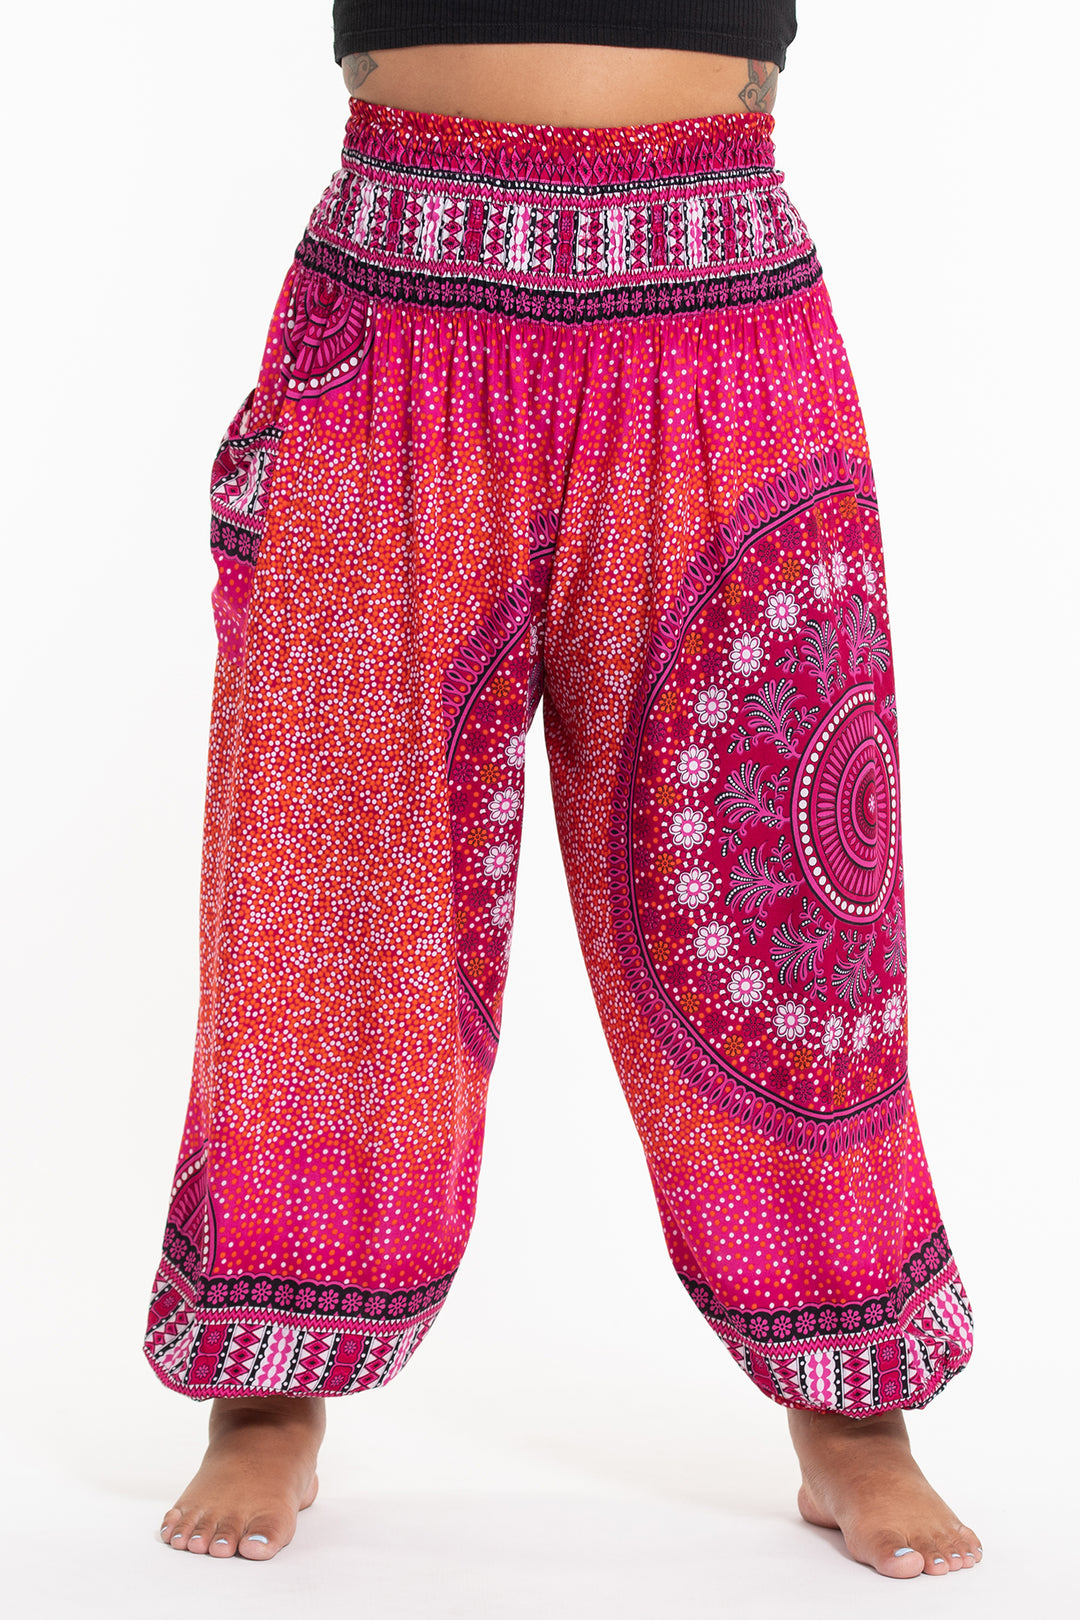 Pink Harem Pants, Kimonos, and Accessories